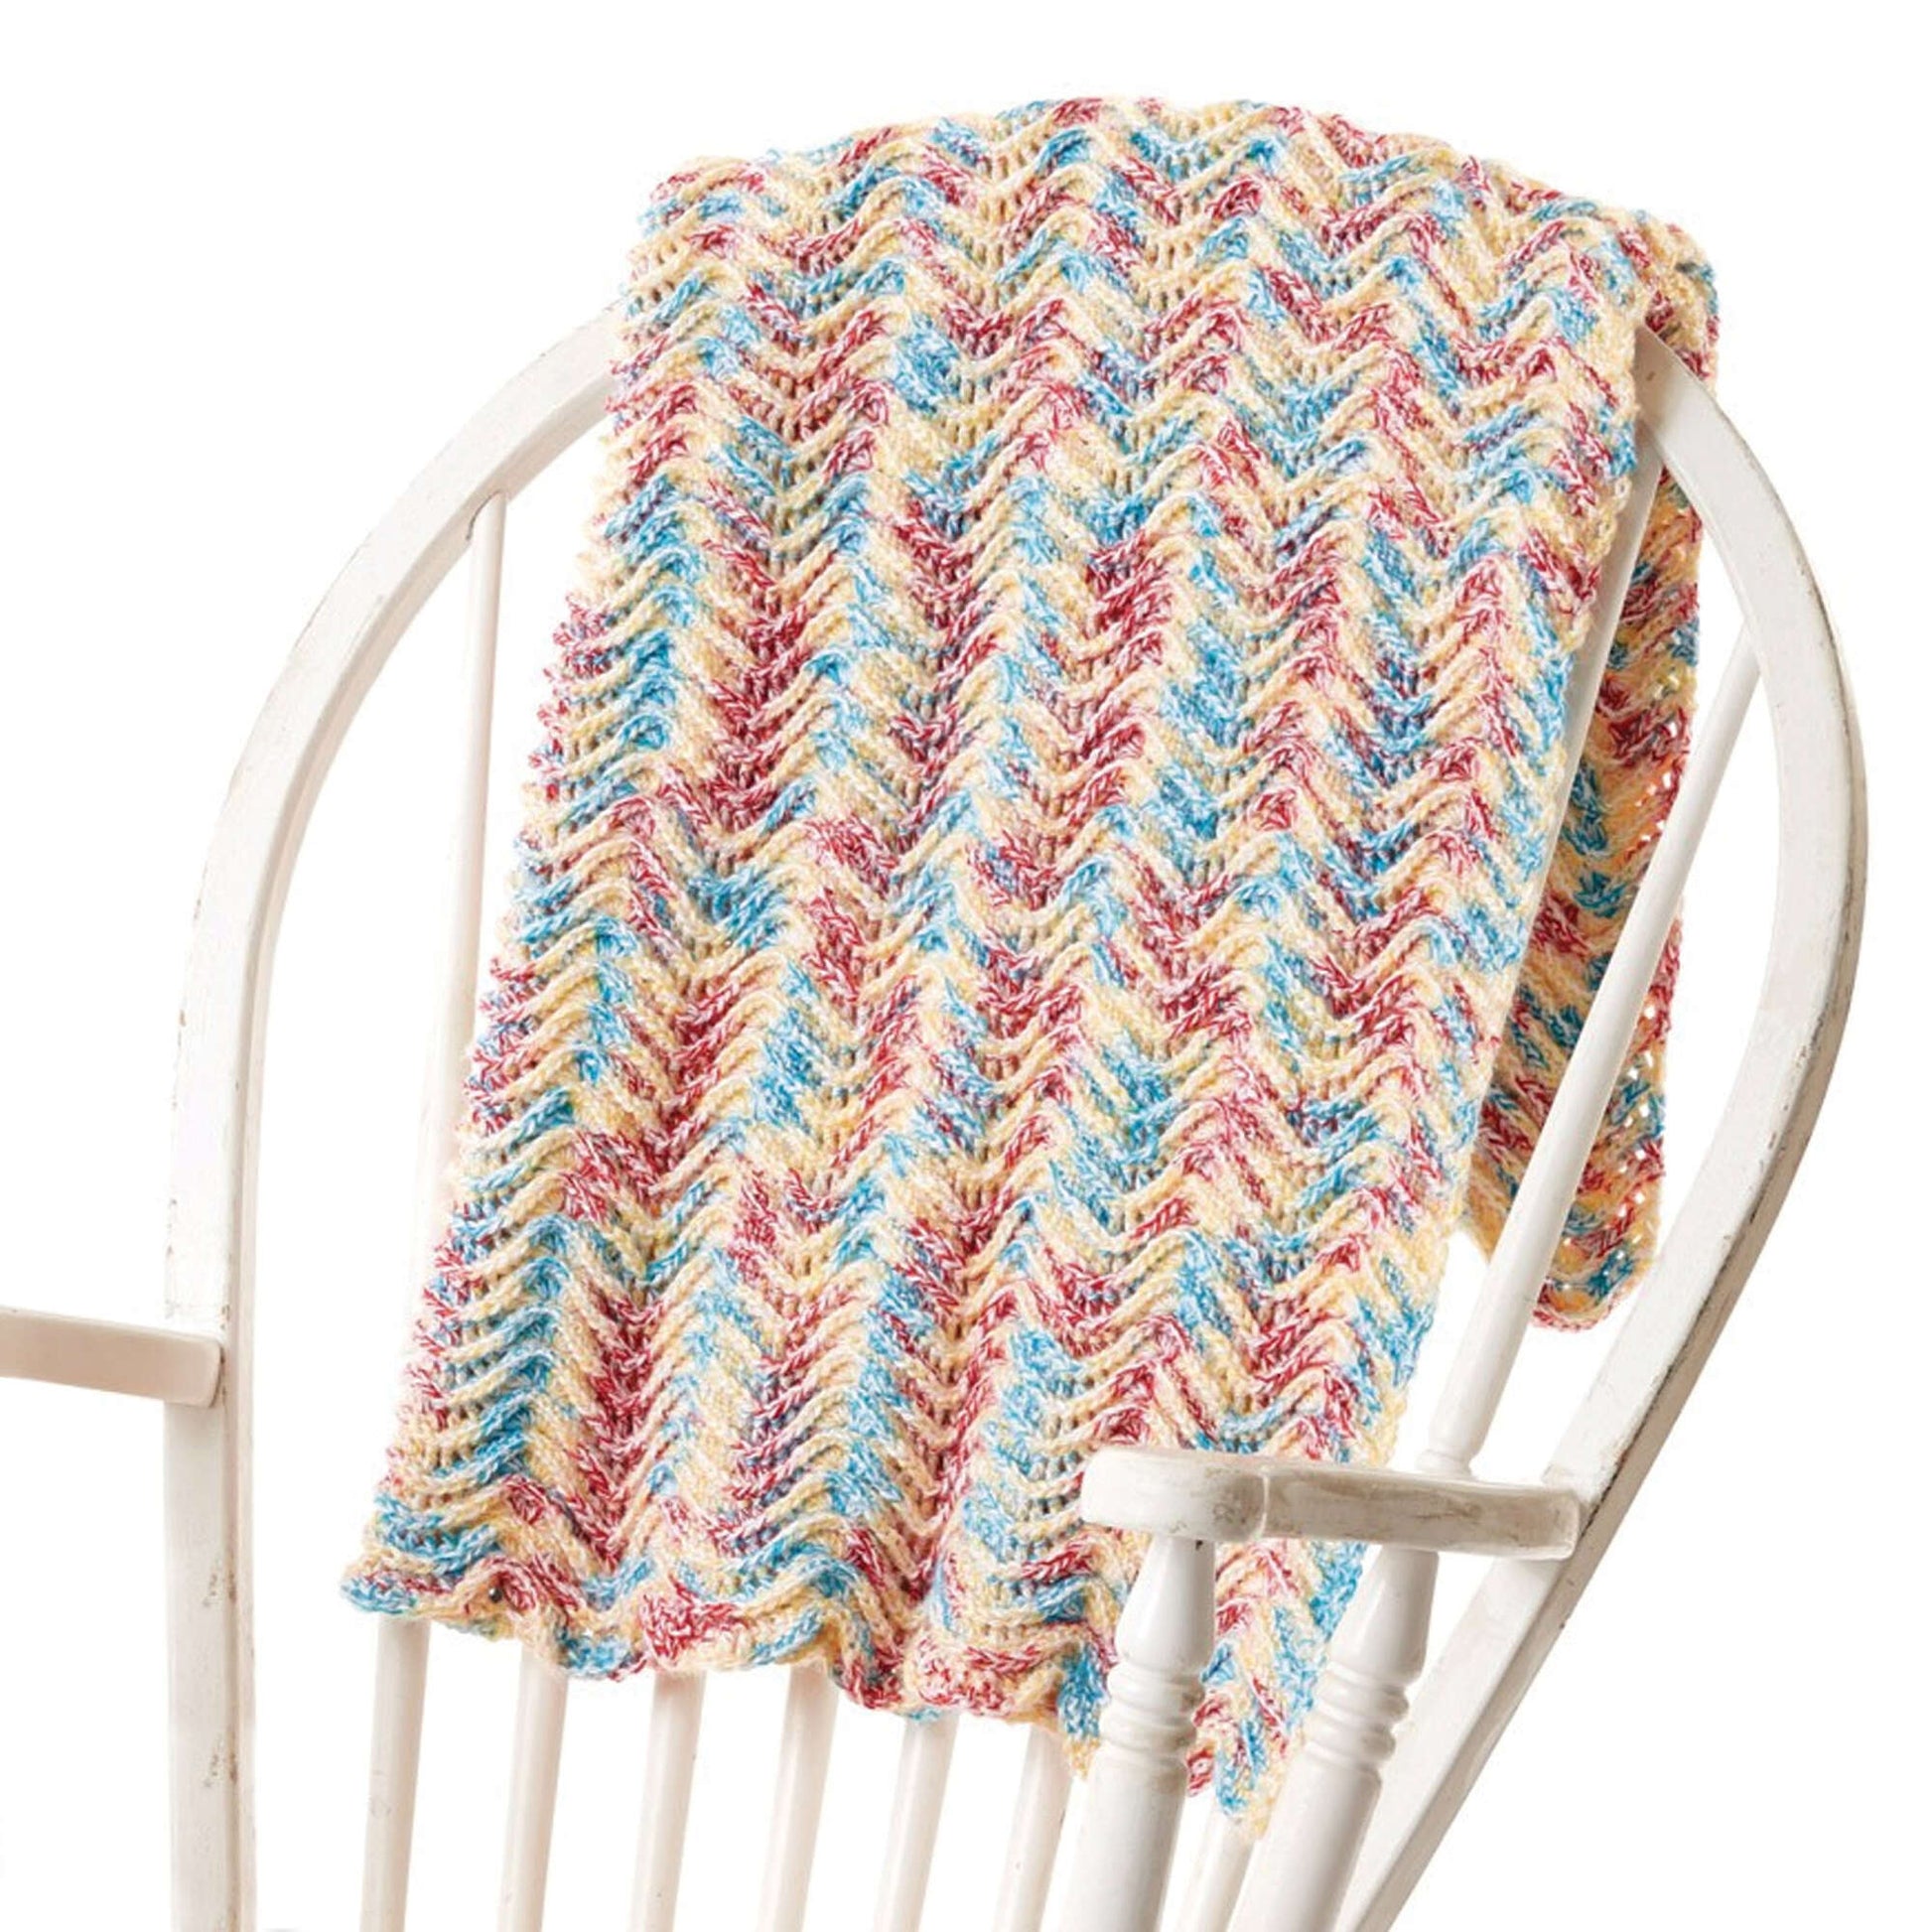 Bernat Ripple Effect Crochet Blanket Crochet Blanket made in Bernat Softee Baby yarn